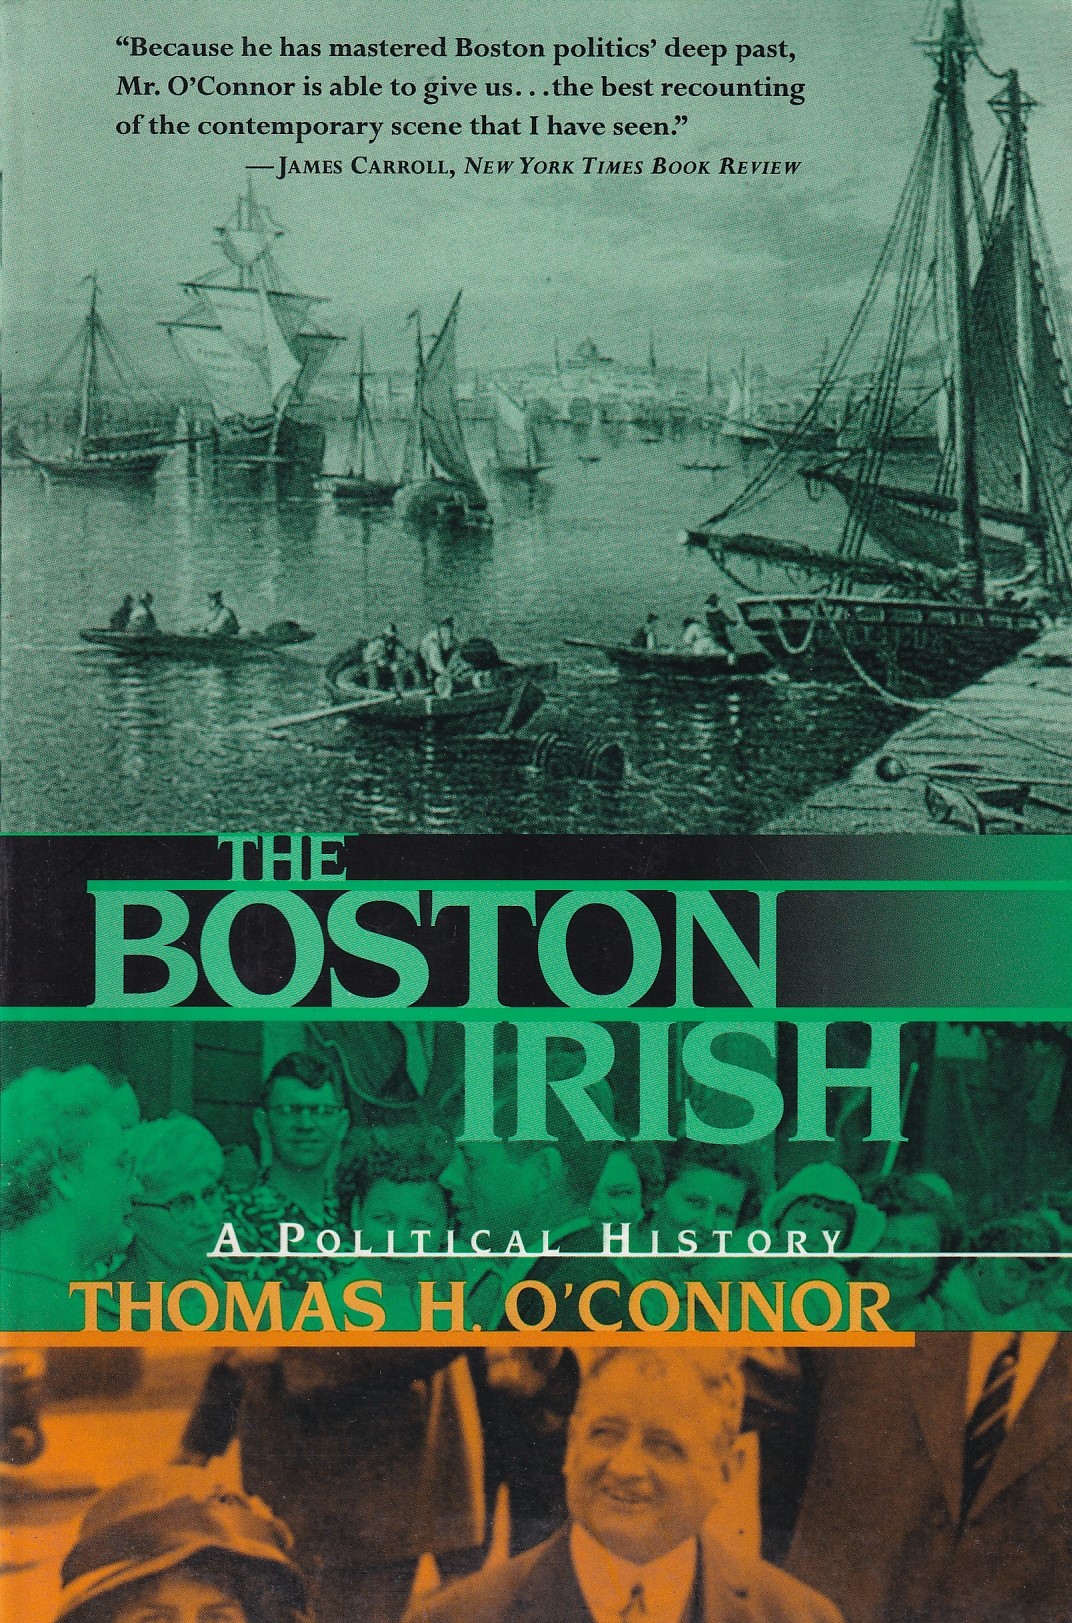 The Boston Irish: A Political History by Thomas H. O'Connor